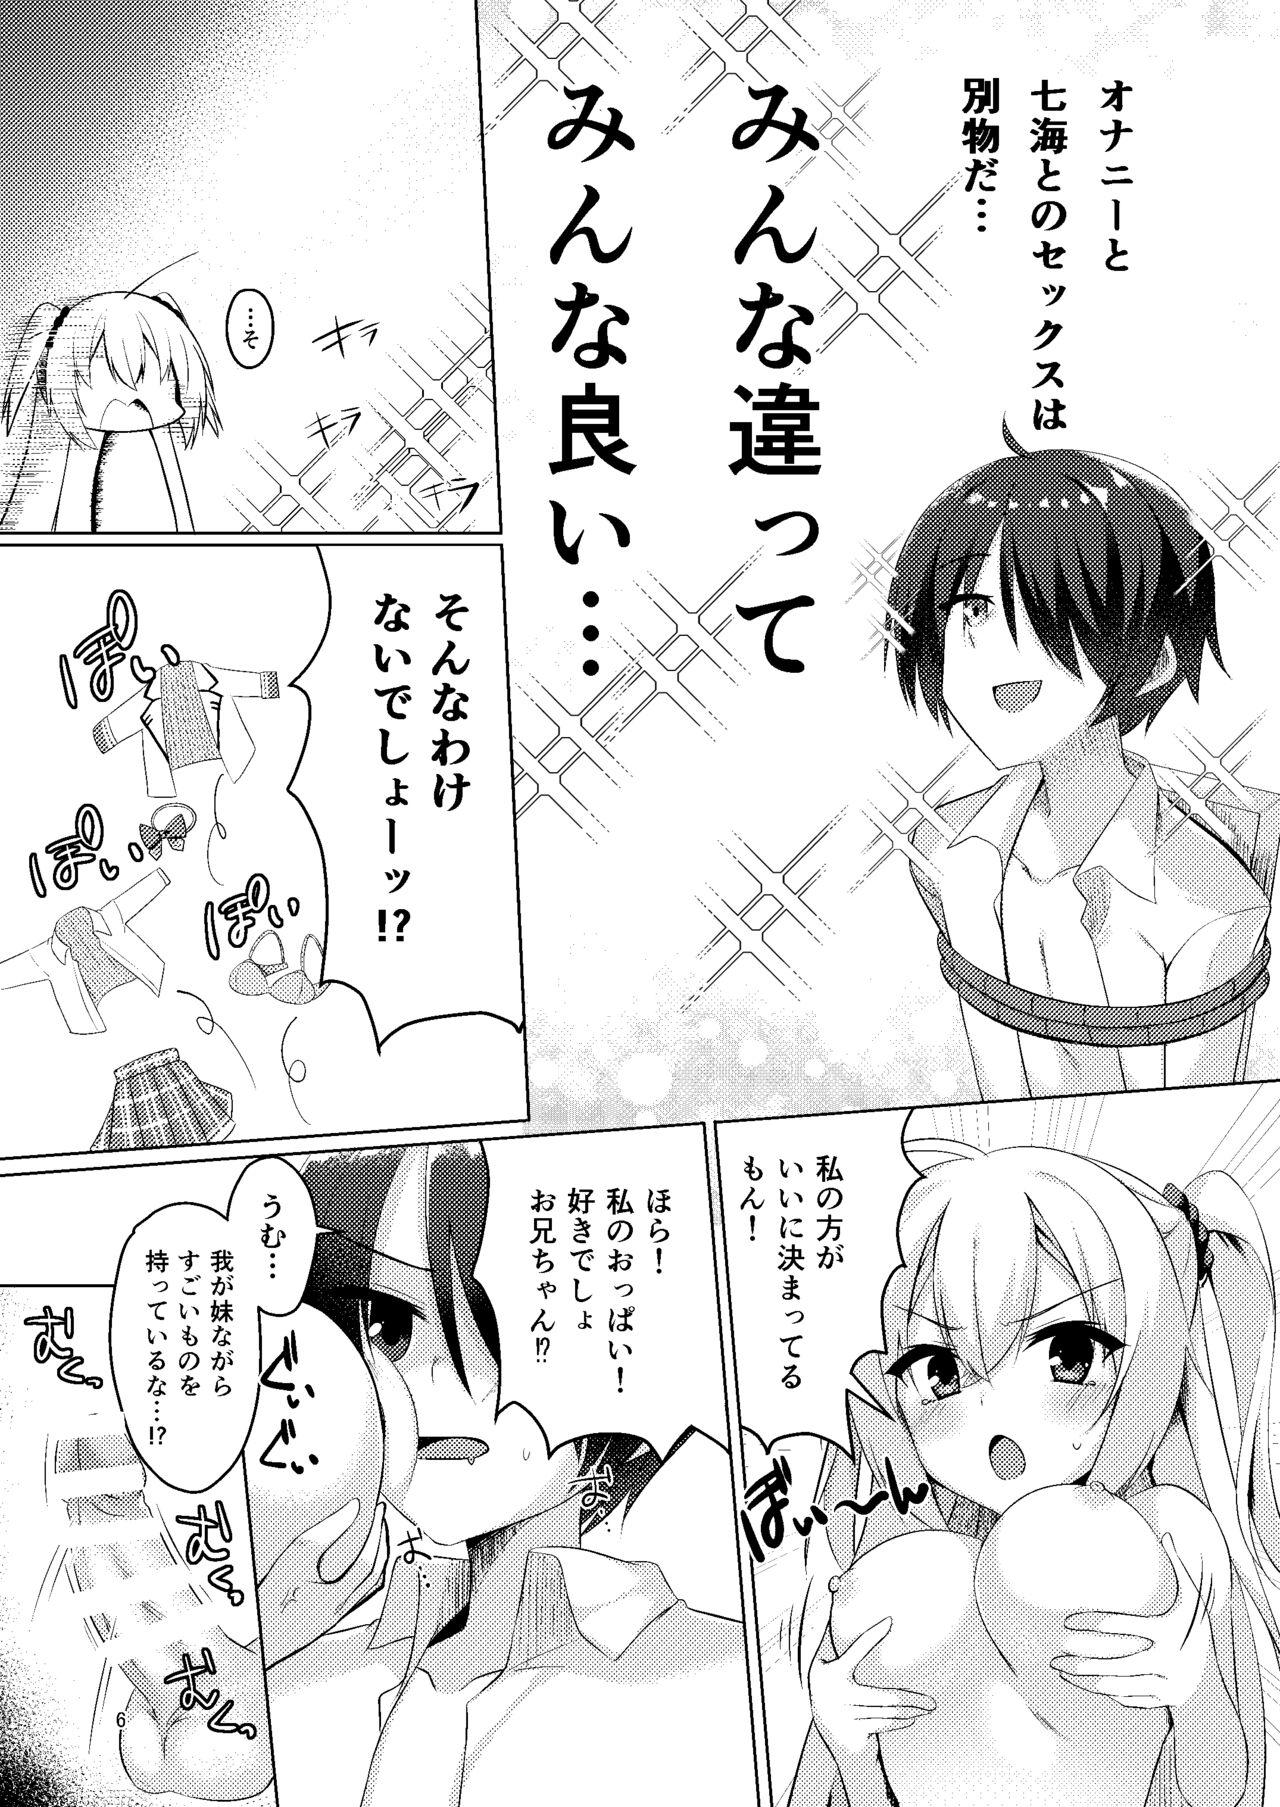 Riding Onii-chan ga Imouto ni Kateru Wake Nai desho - Riddle joker Camsex - Page 6